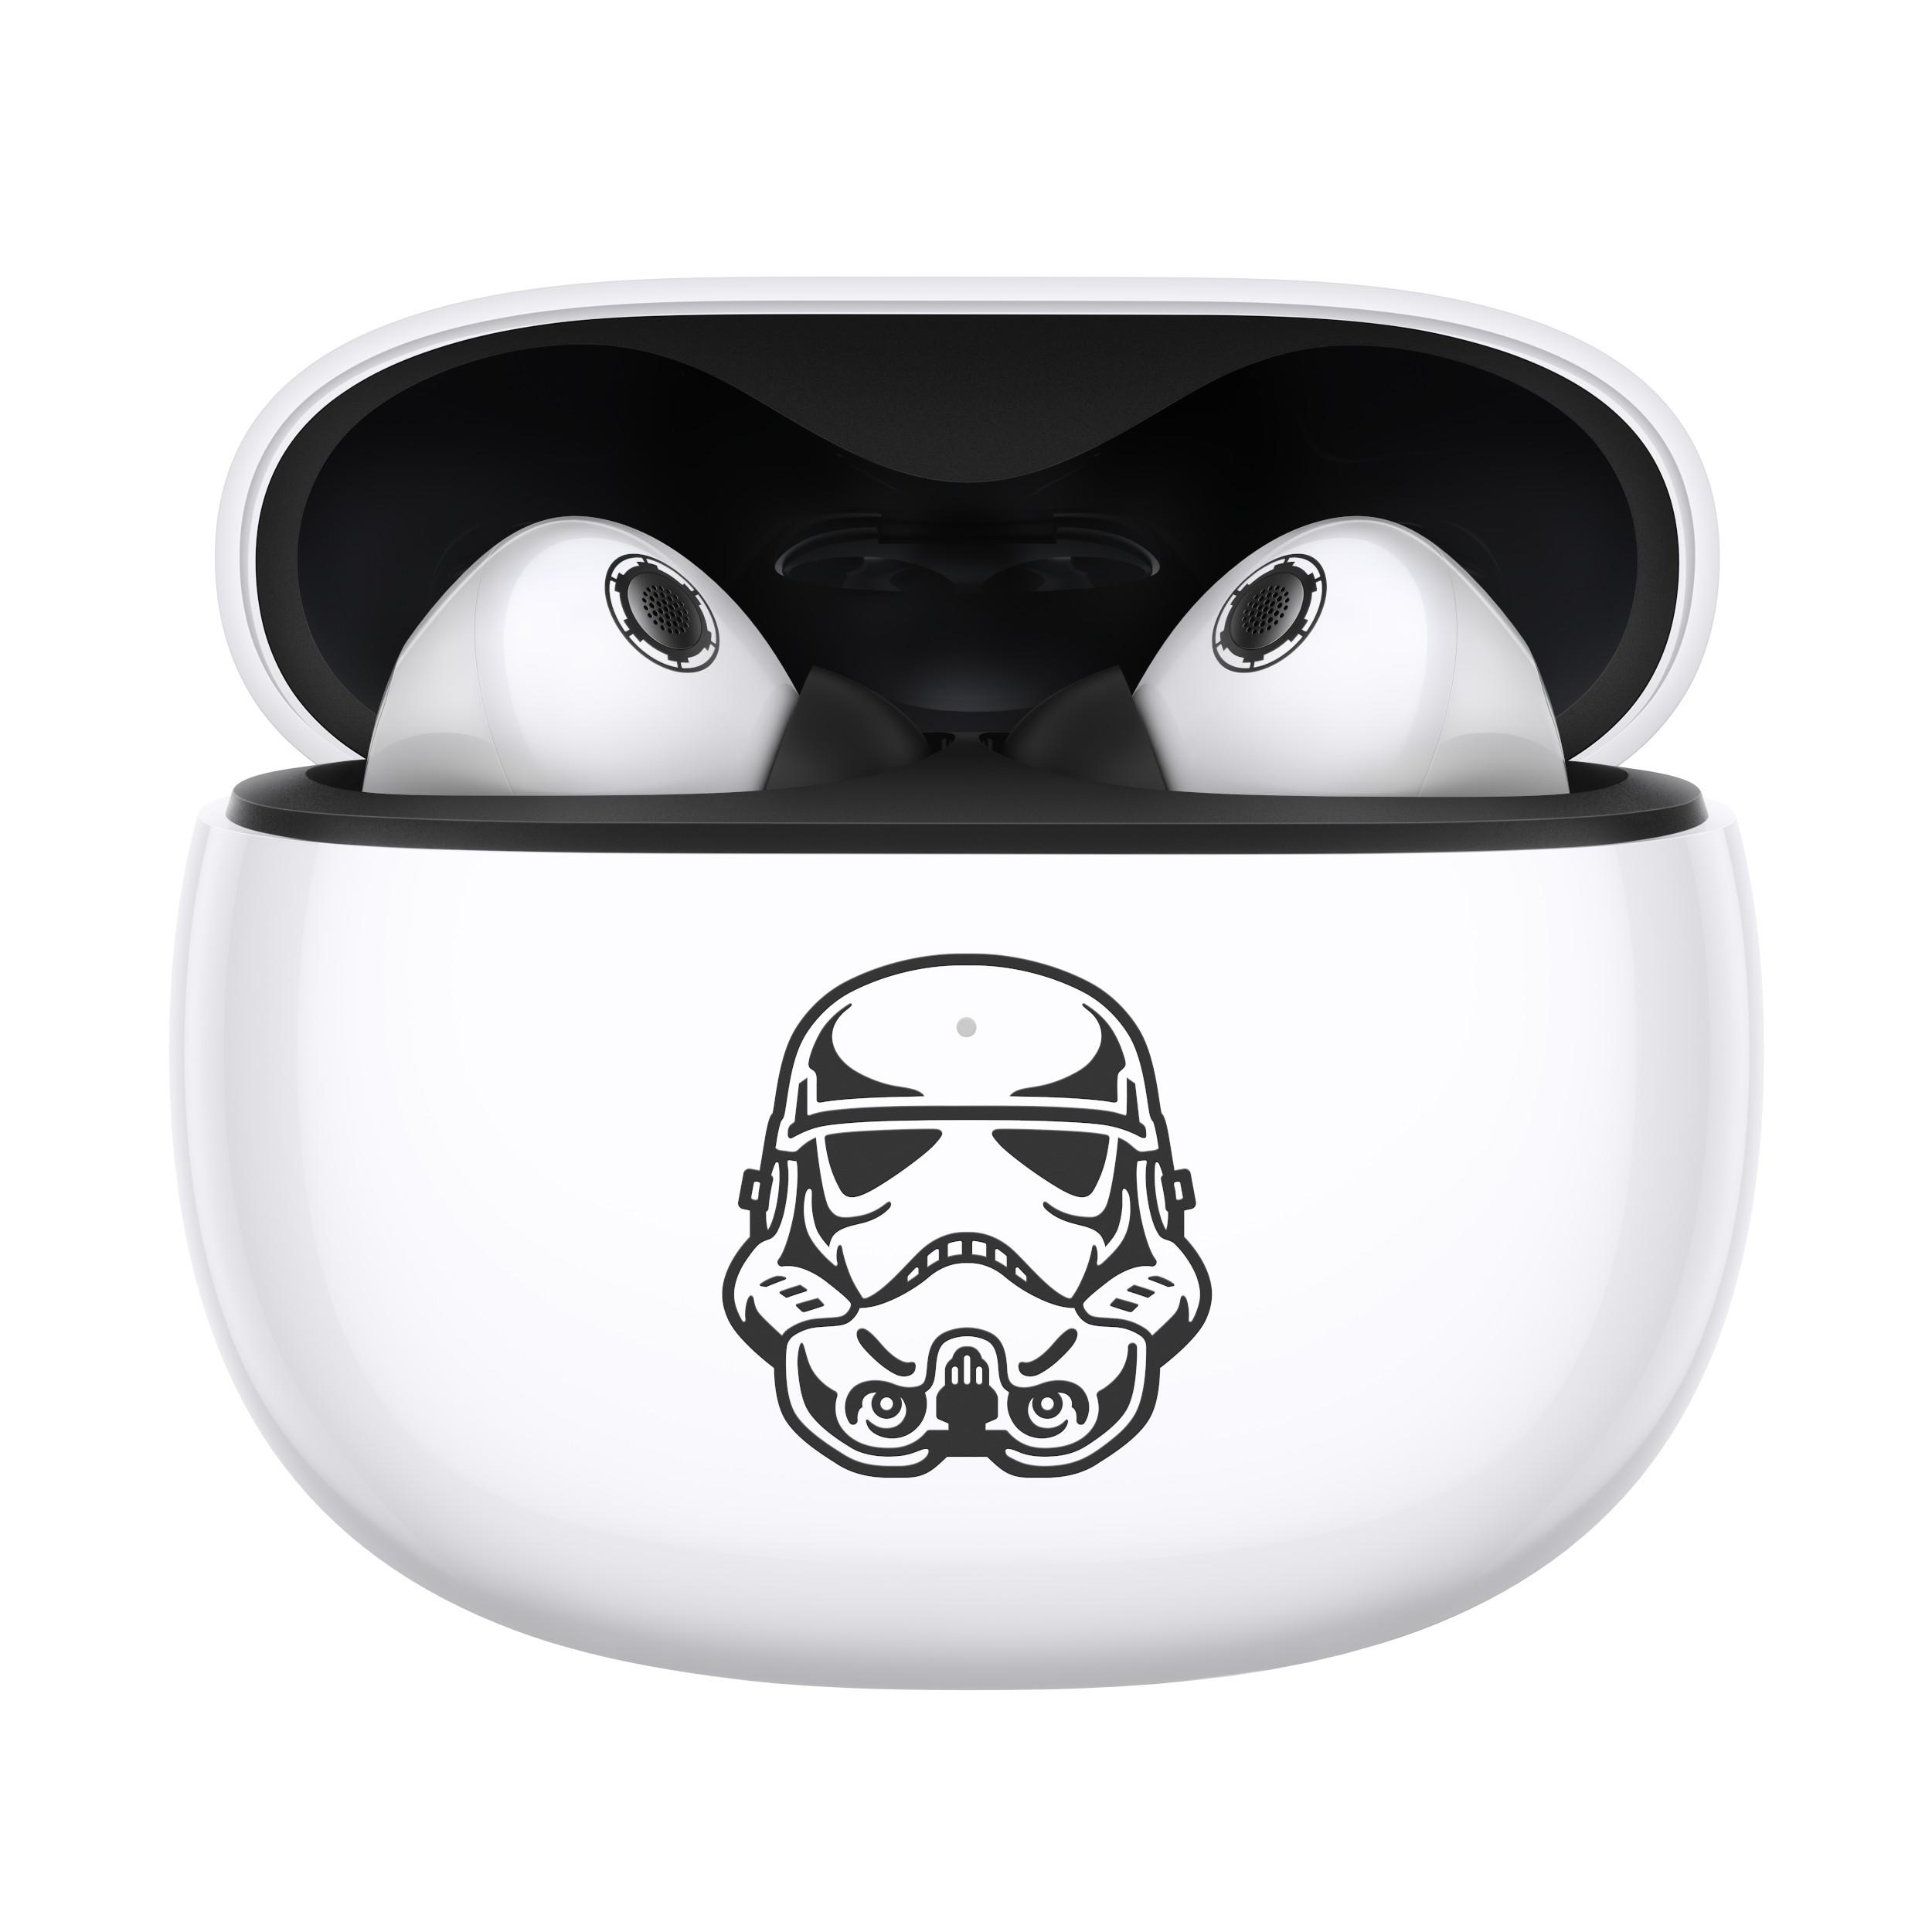 In-ear Kopfhörer Wars Star Edition, Buds 3 Bluetooth Wireless, XIAOMI White/Black Limitierte True Stormtrooper